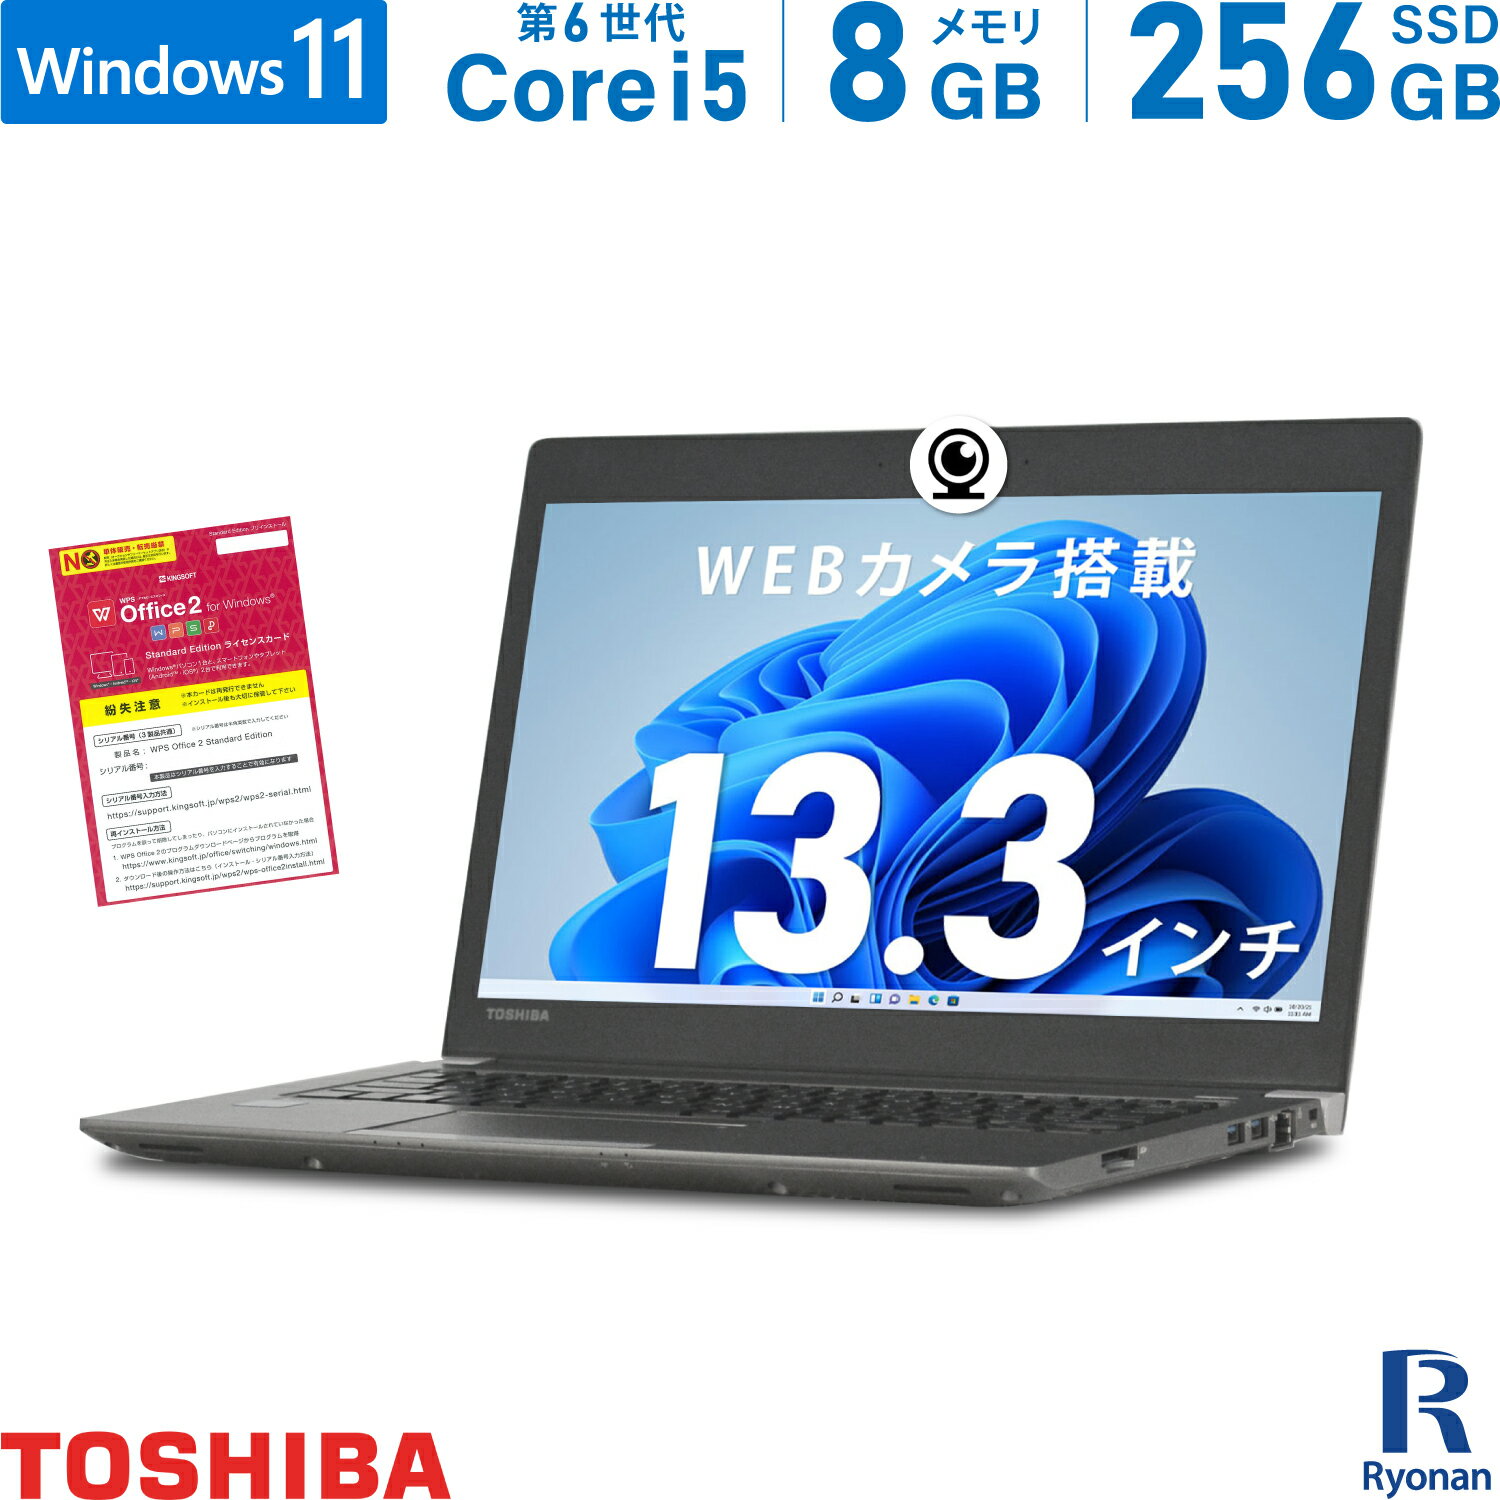 【10 OFFクーポン配布中】東芝 TOSHIBA Dynabook R63 第6世代 Core i5 メモリ:8GB 新品 M.2 SSD:256GB ノートパソコン 13.3インチ 無線LAN HDMI SDカードスロット Office付 中古パソコン ノートPC Windows 11 搭載 Windows 10 WEBカメラ